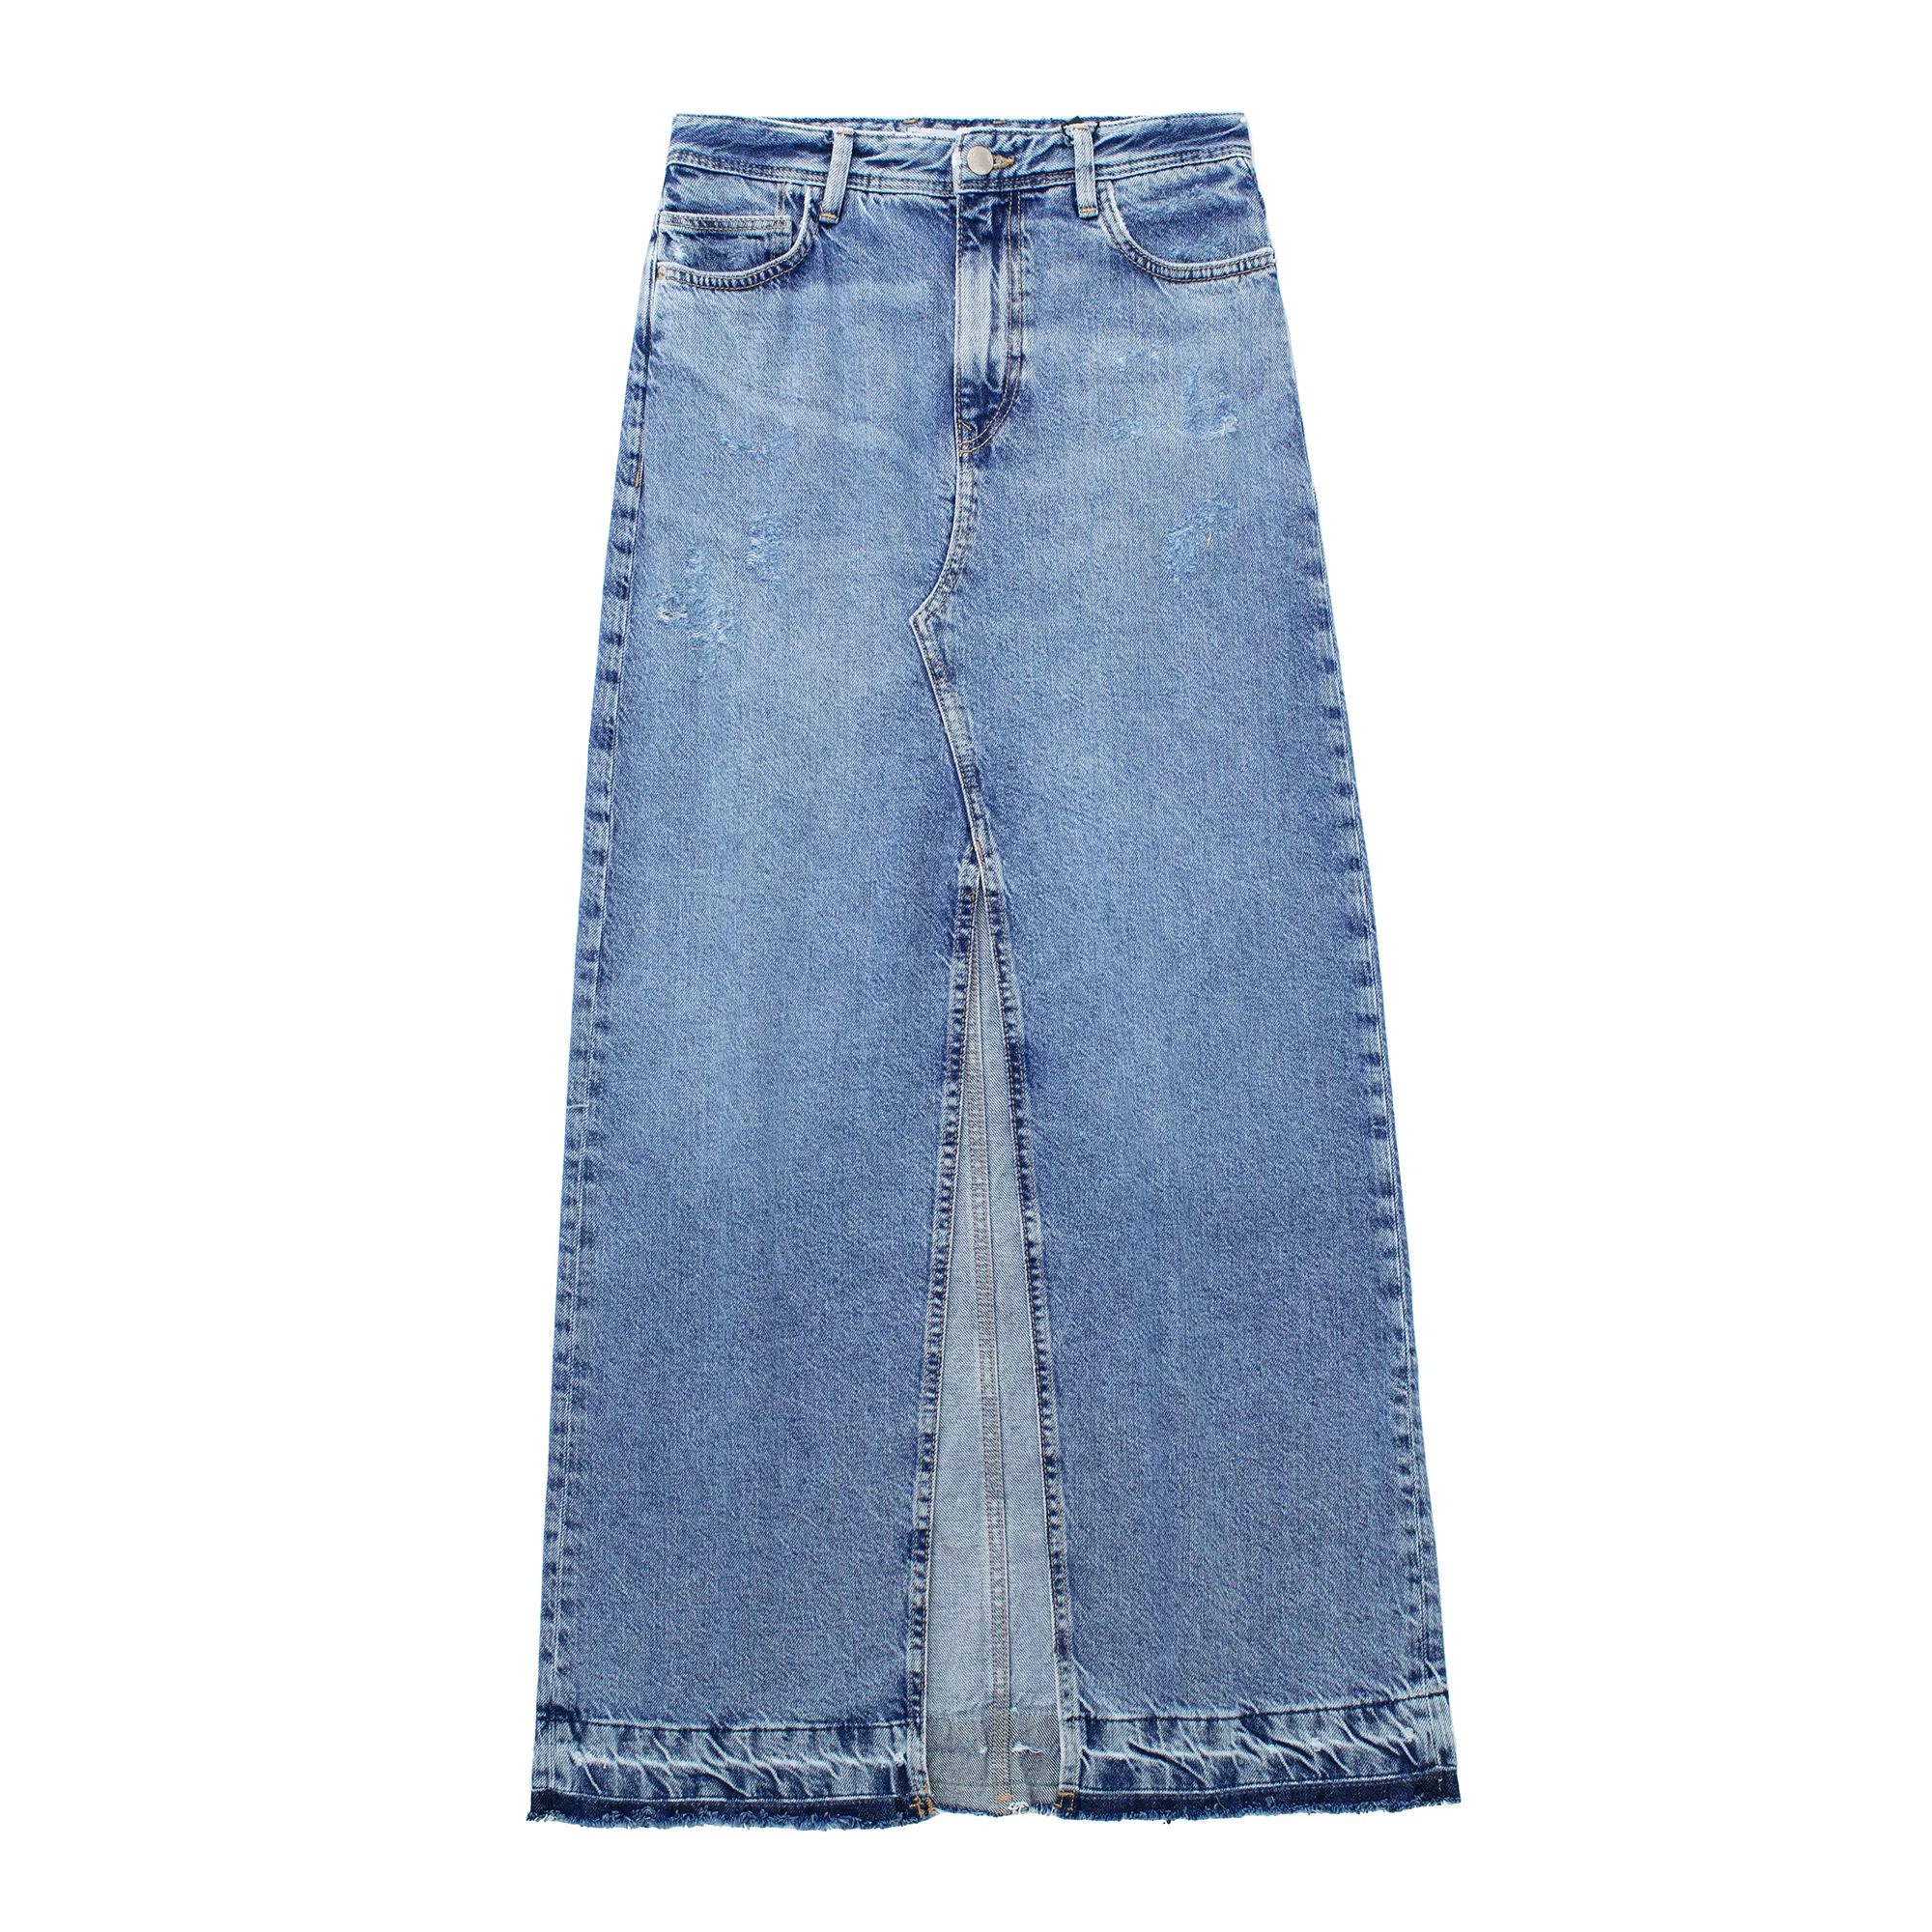 Hot sale front slit zipper fly denim blue color casual fashion women long jeans skirts